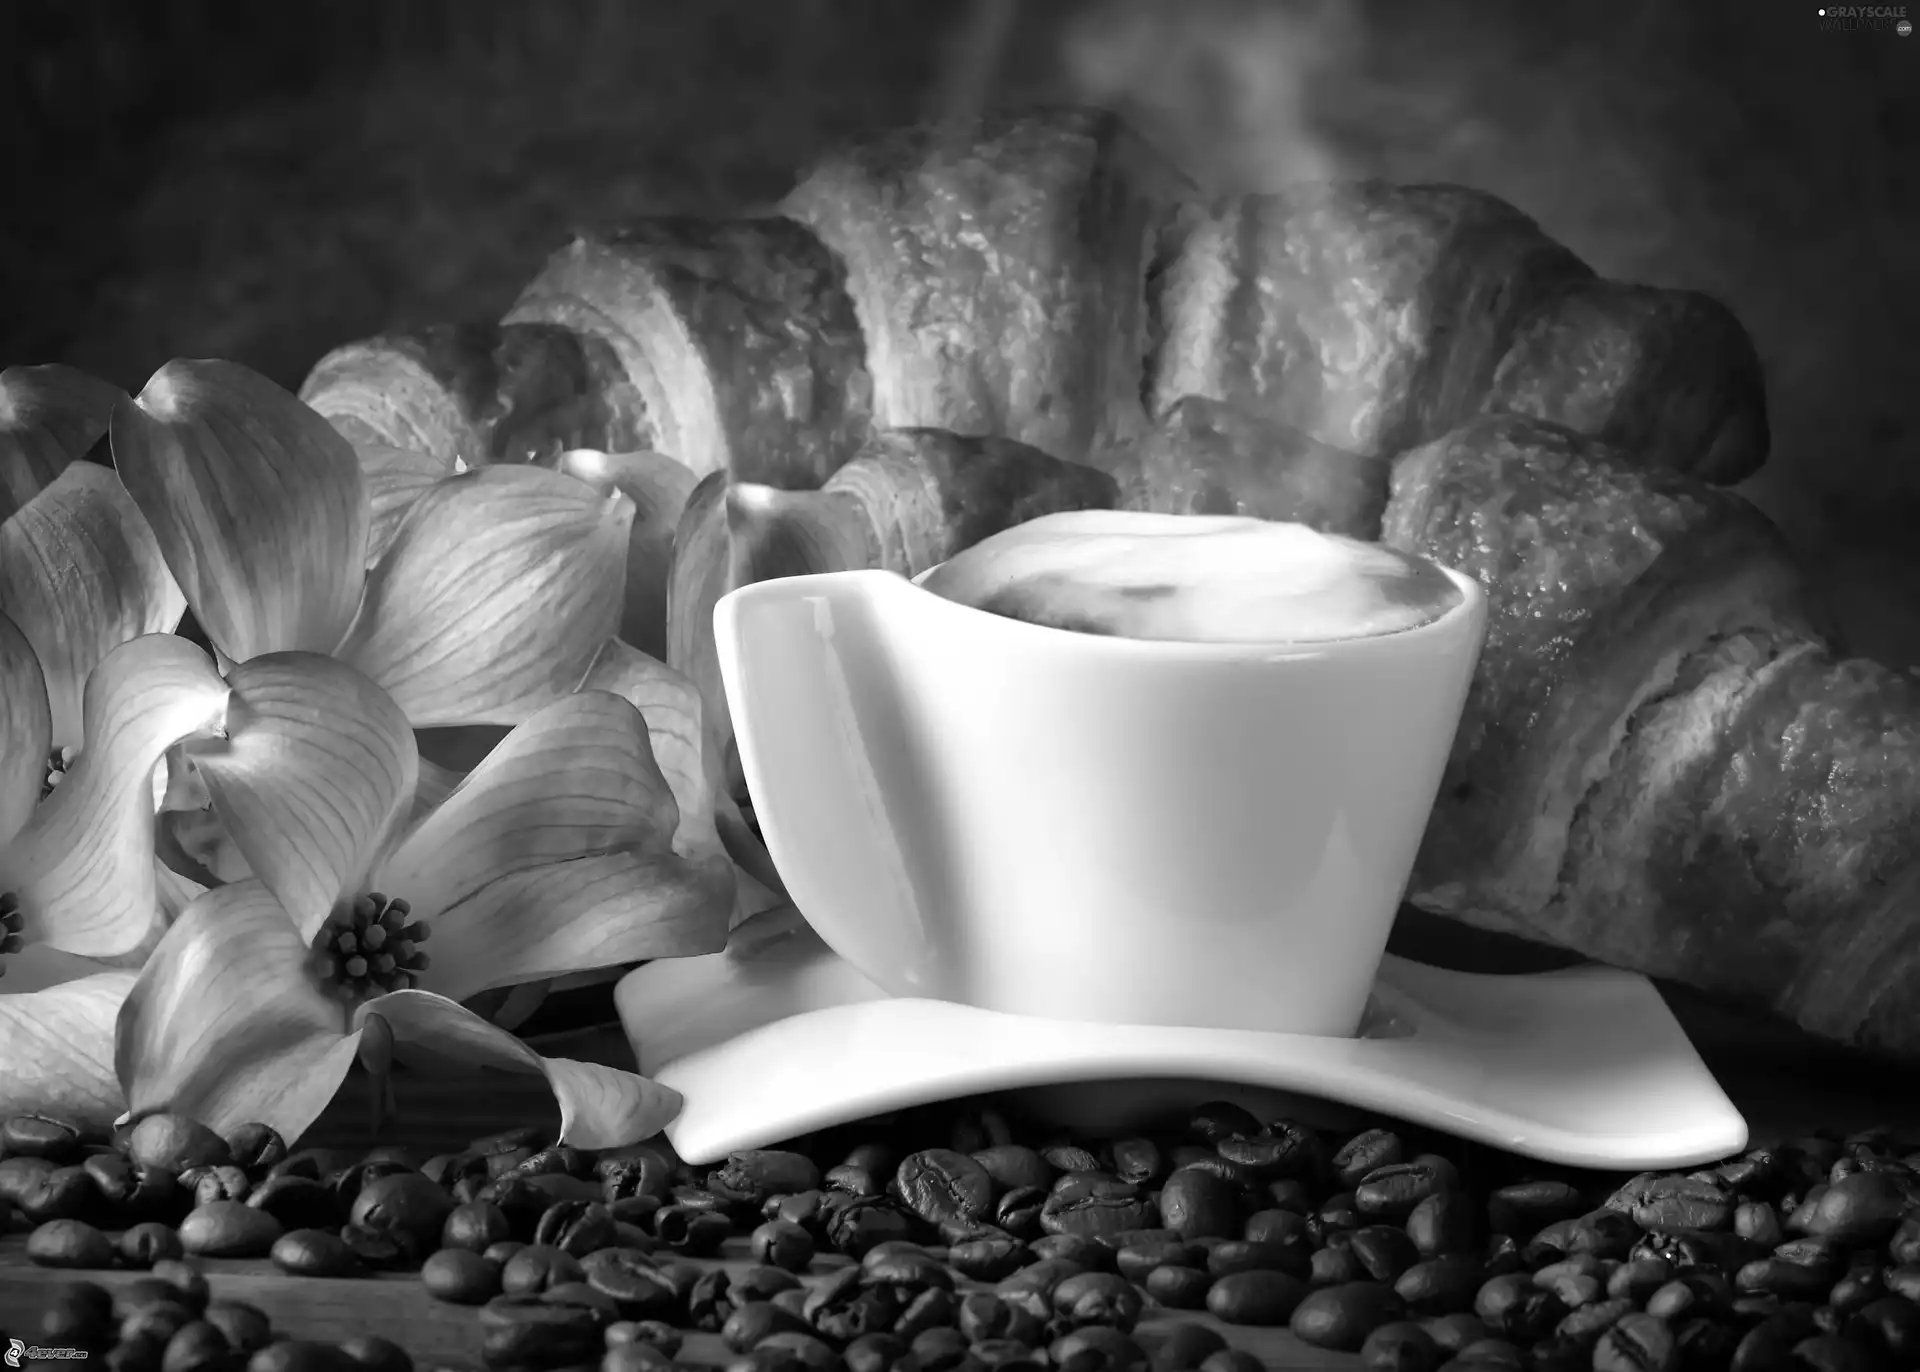 Flowers, croissants, coffee